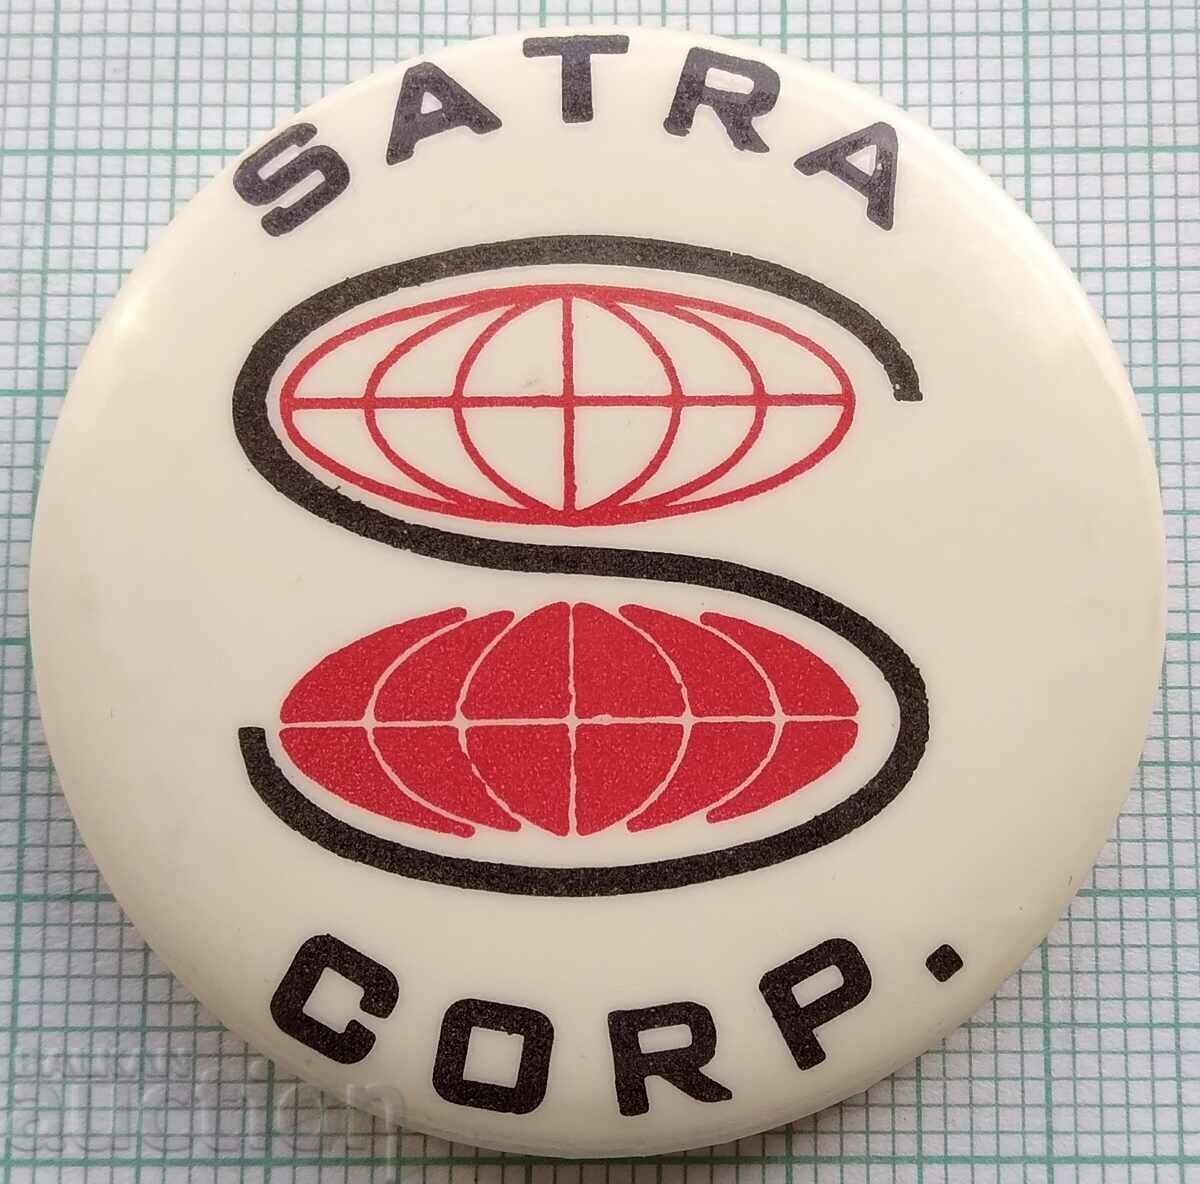 14632 Insigna - Satra Corporation